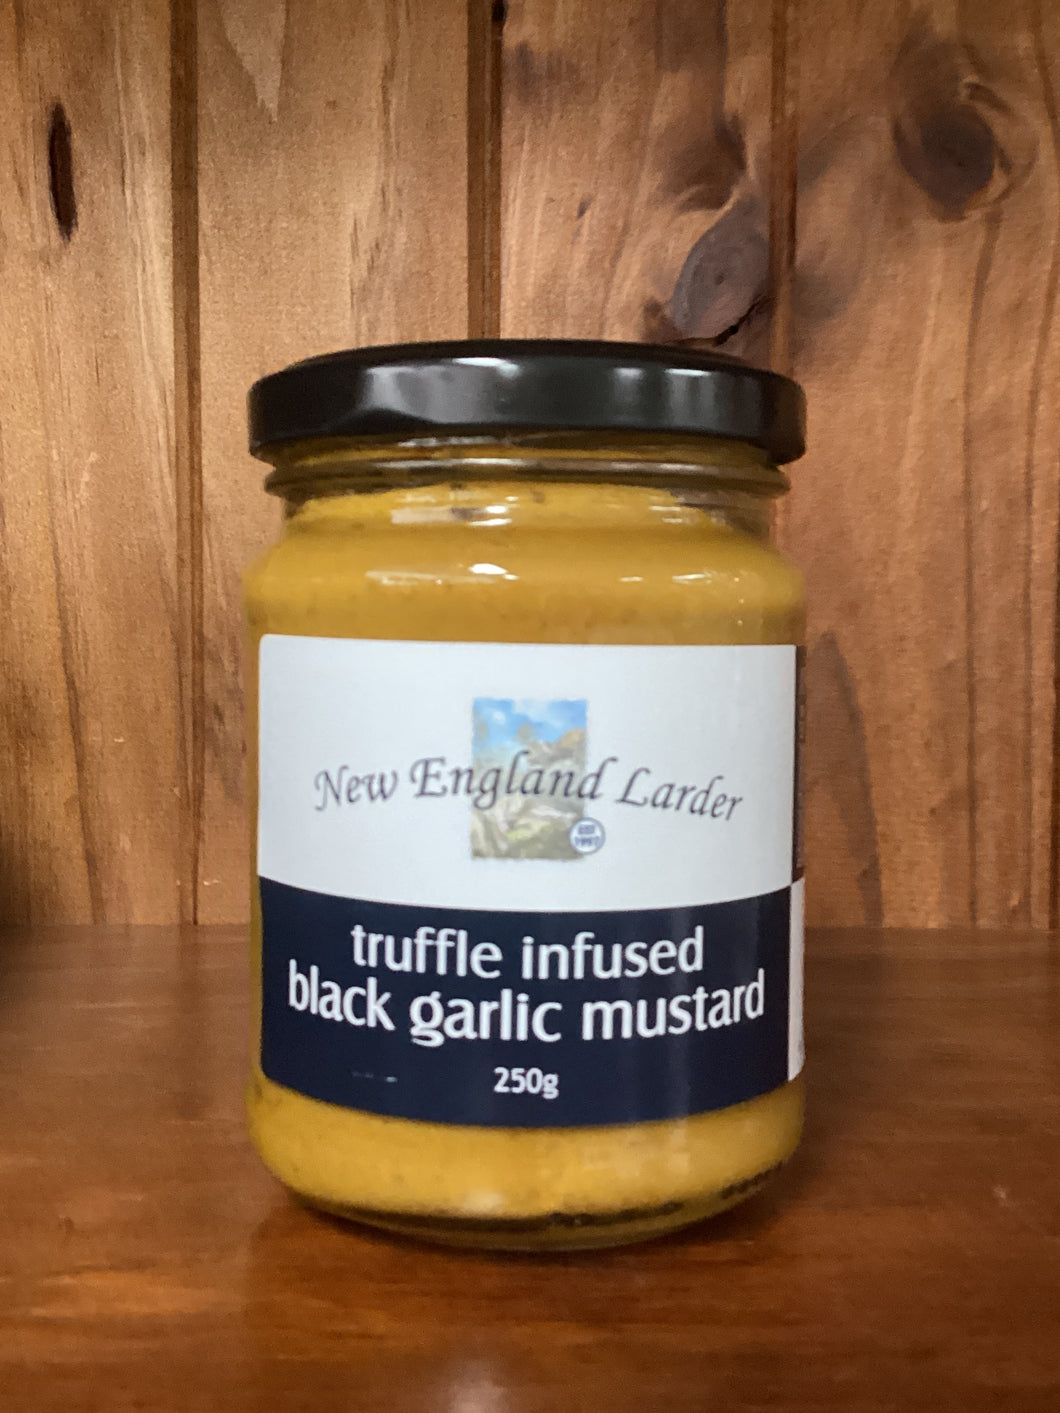 Truffle infused black garlic mustard